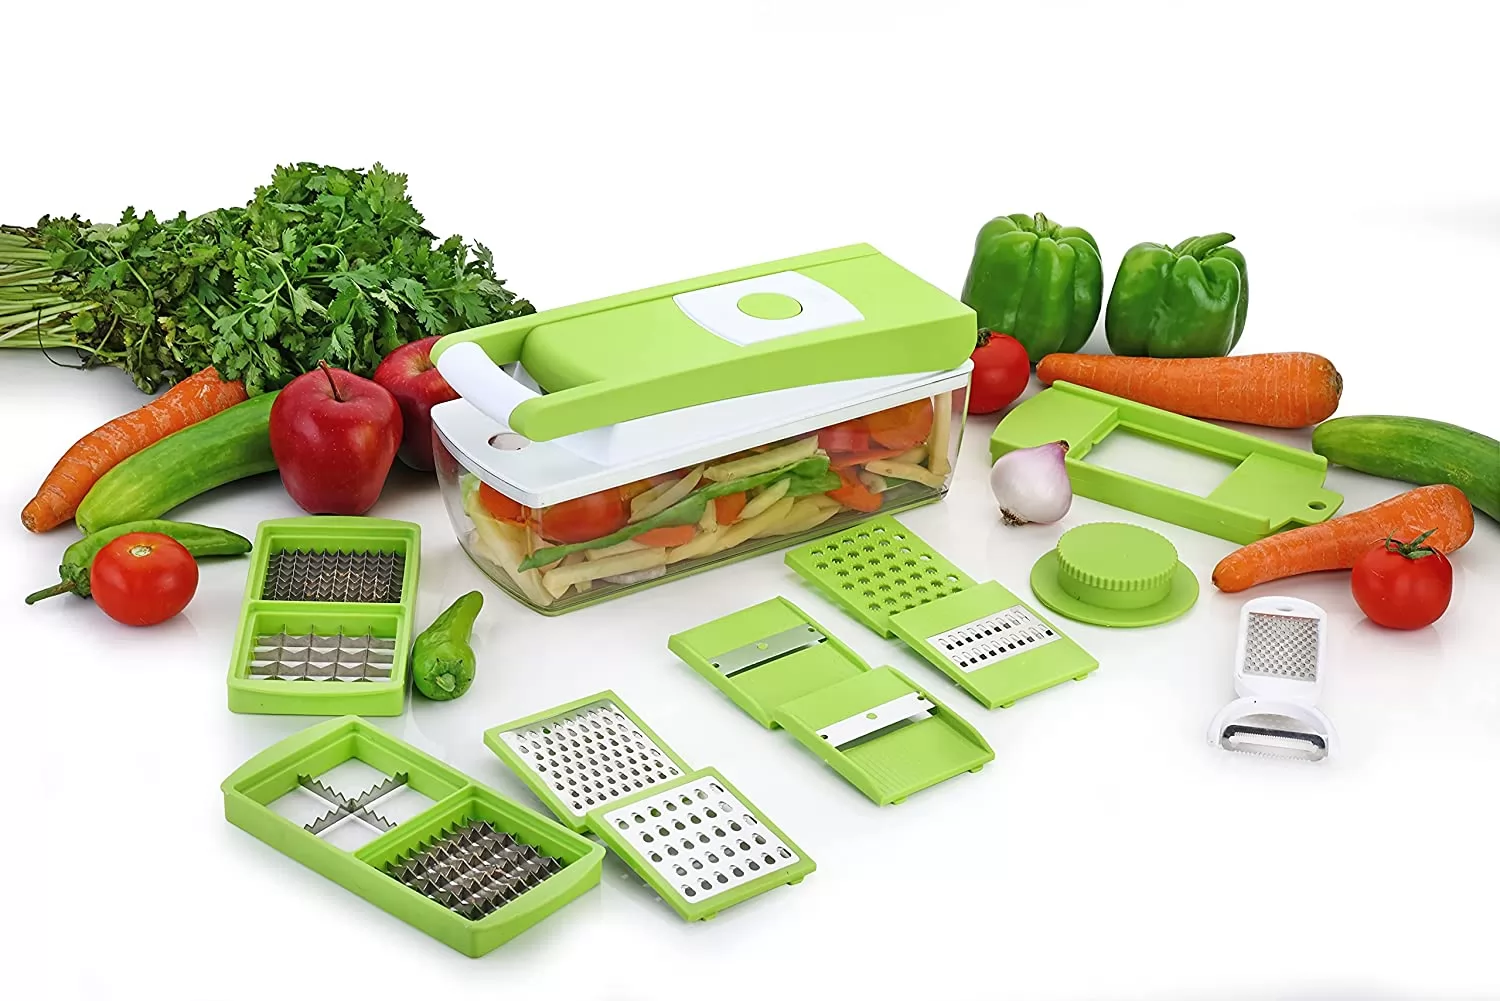 Signoraware 14 in 1 Multi-Purpose Vegetable and Fruit Chopper